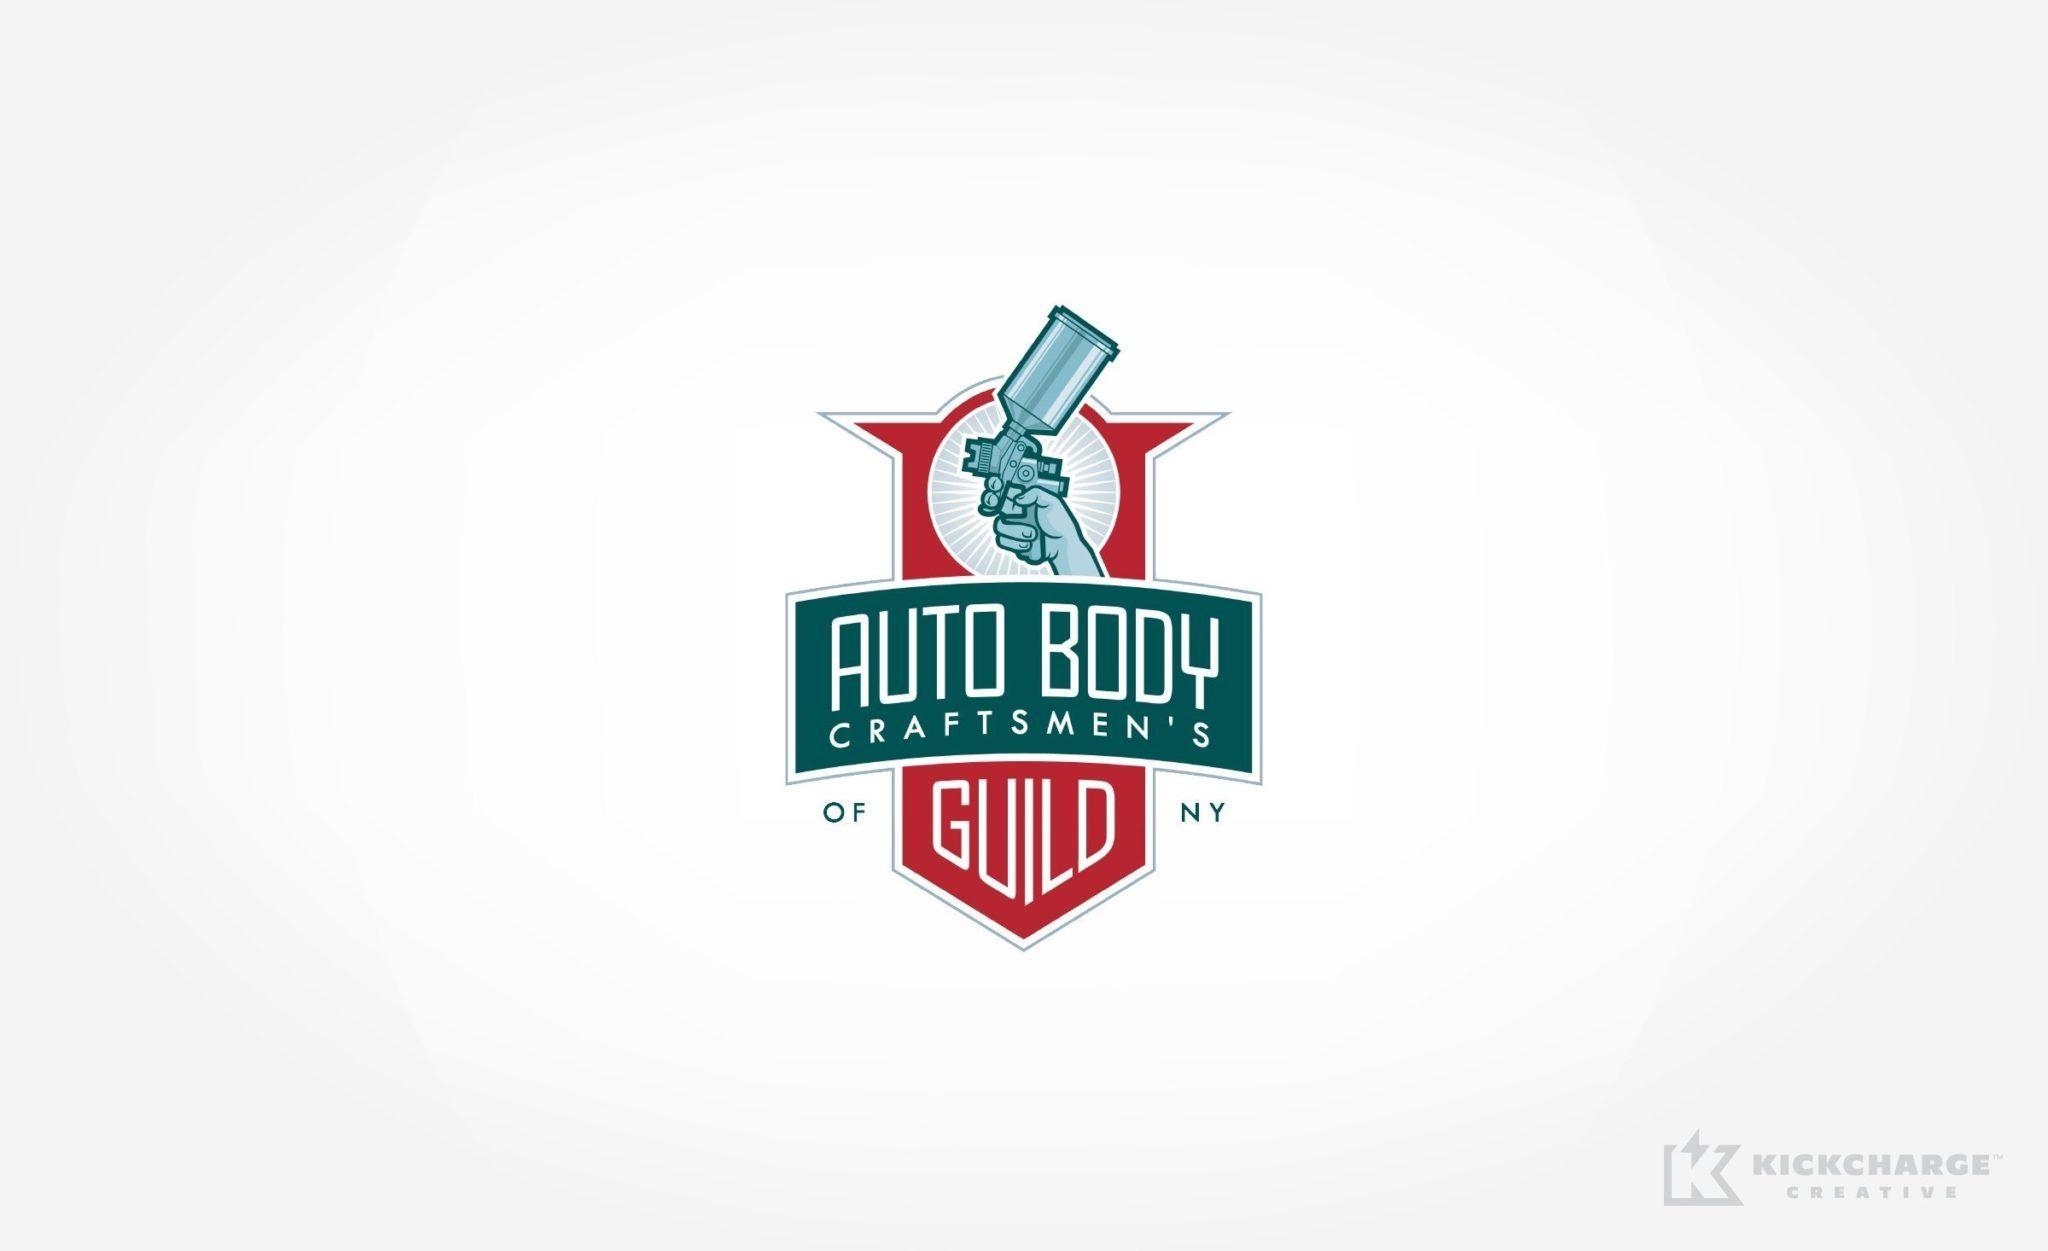 Craftsmen Logo - Auto Body Craftsmen's Guild Creative. kickcharge.com